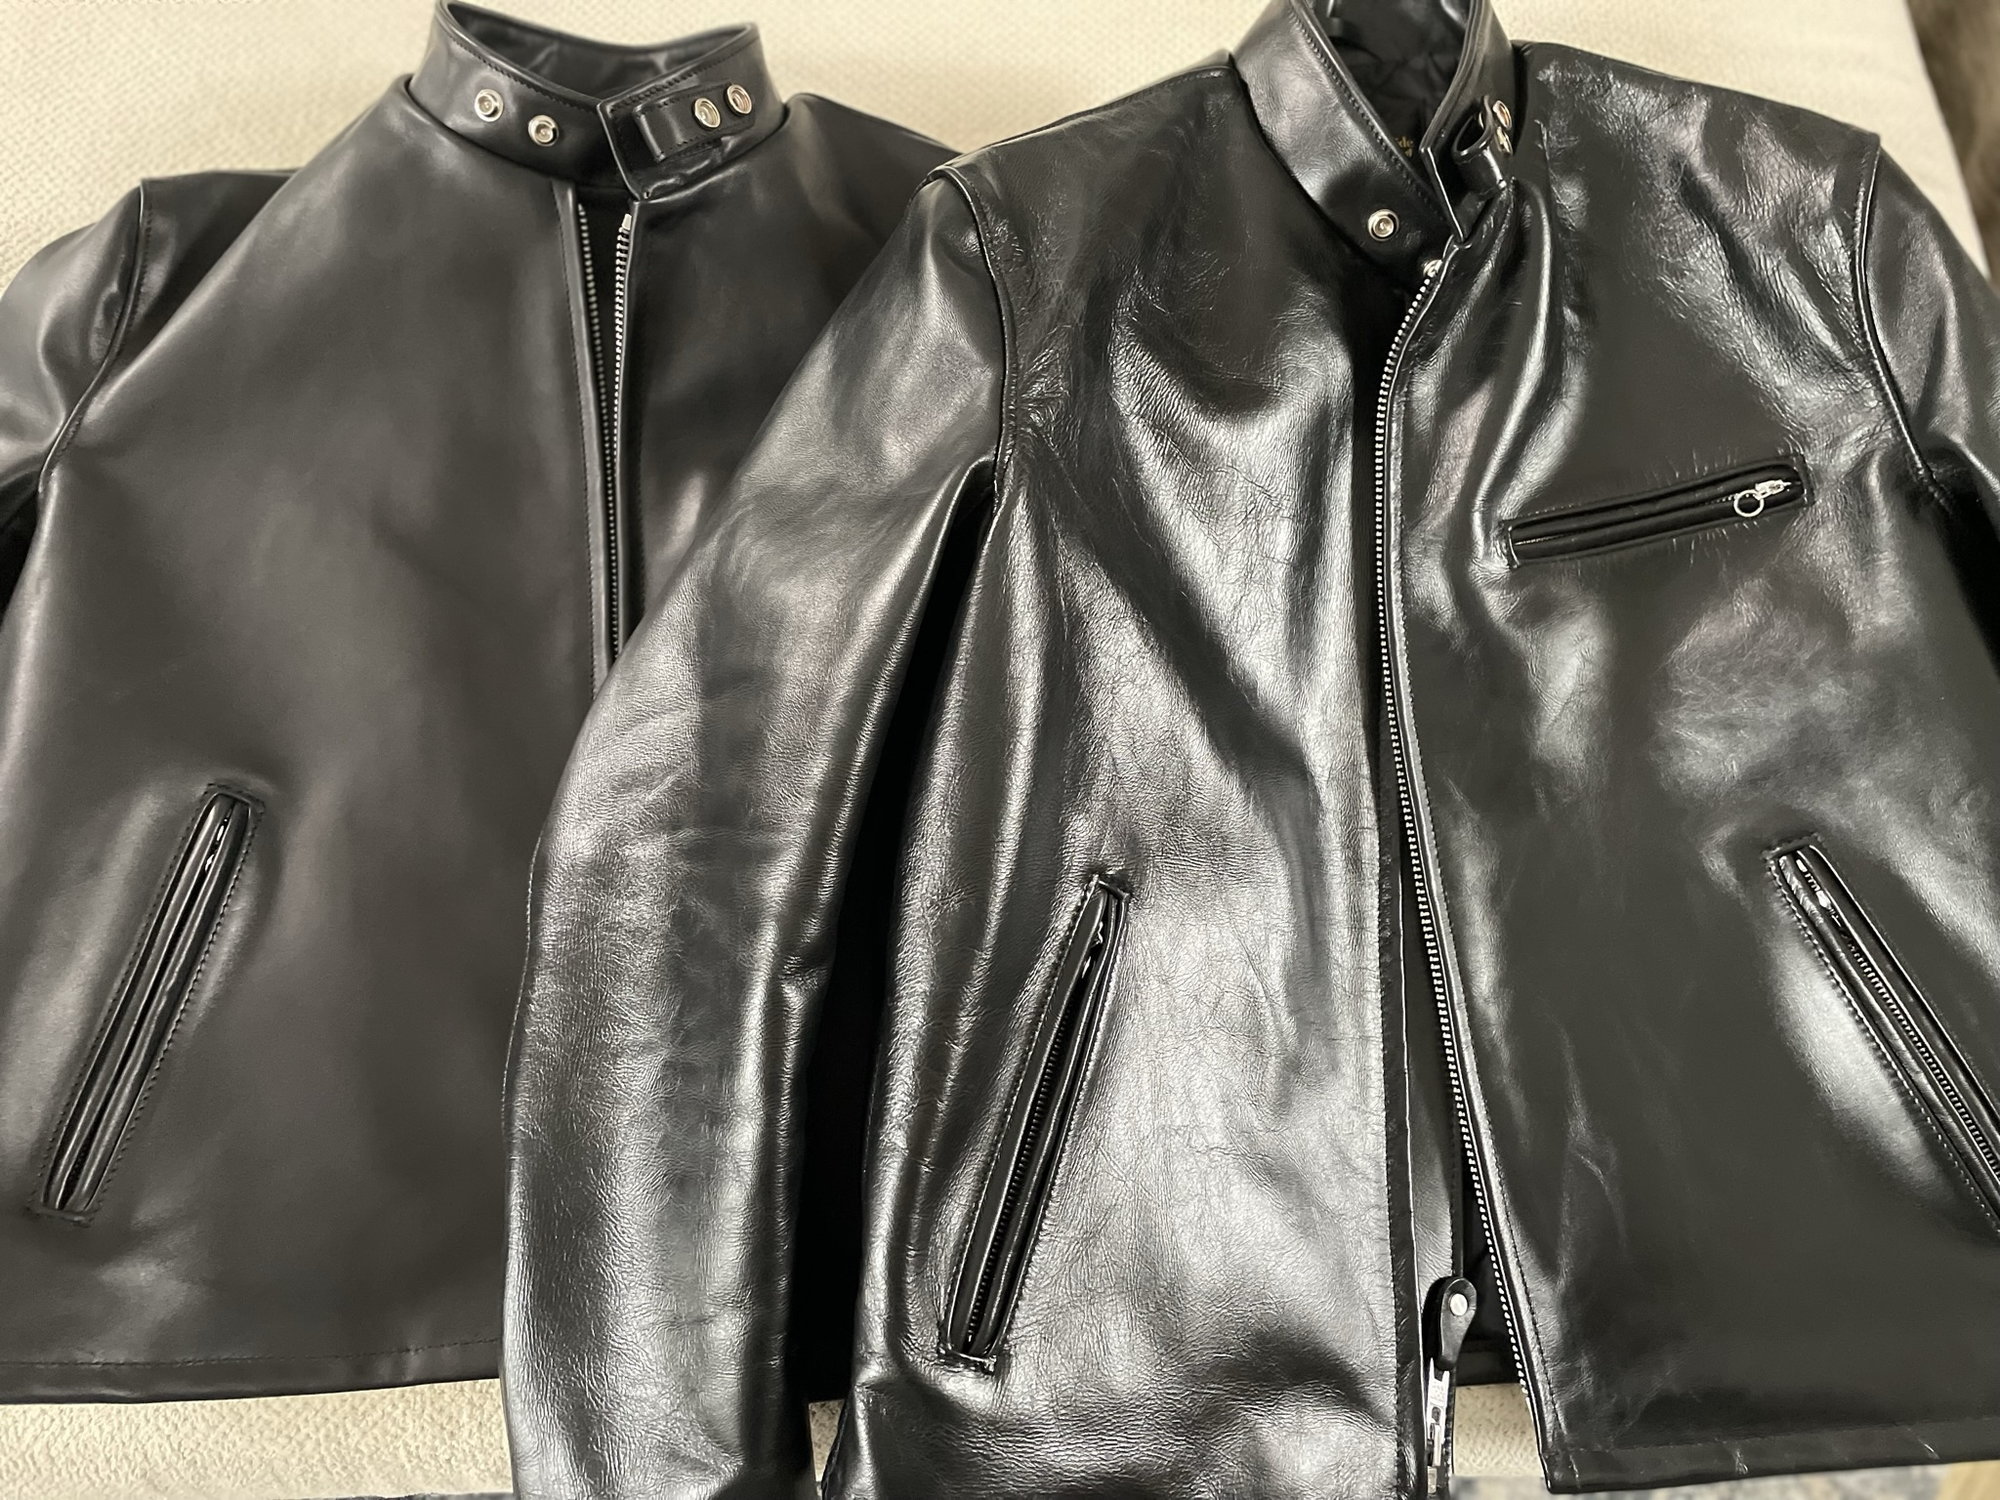 Schott leather jacket 641 and 641HH - Harley Davidson Forums